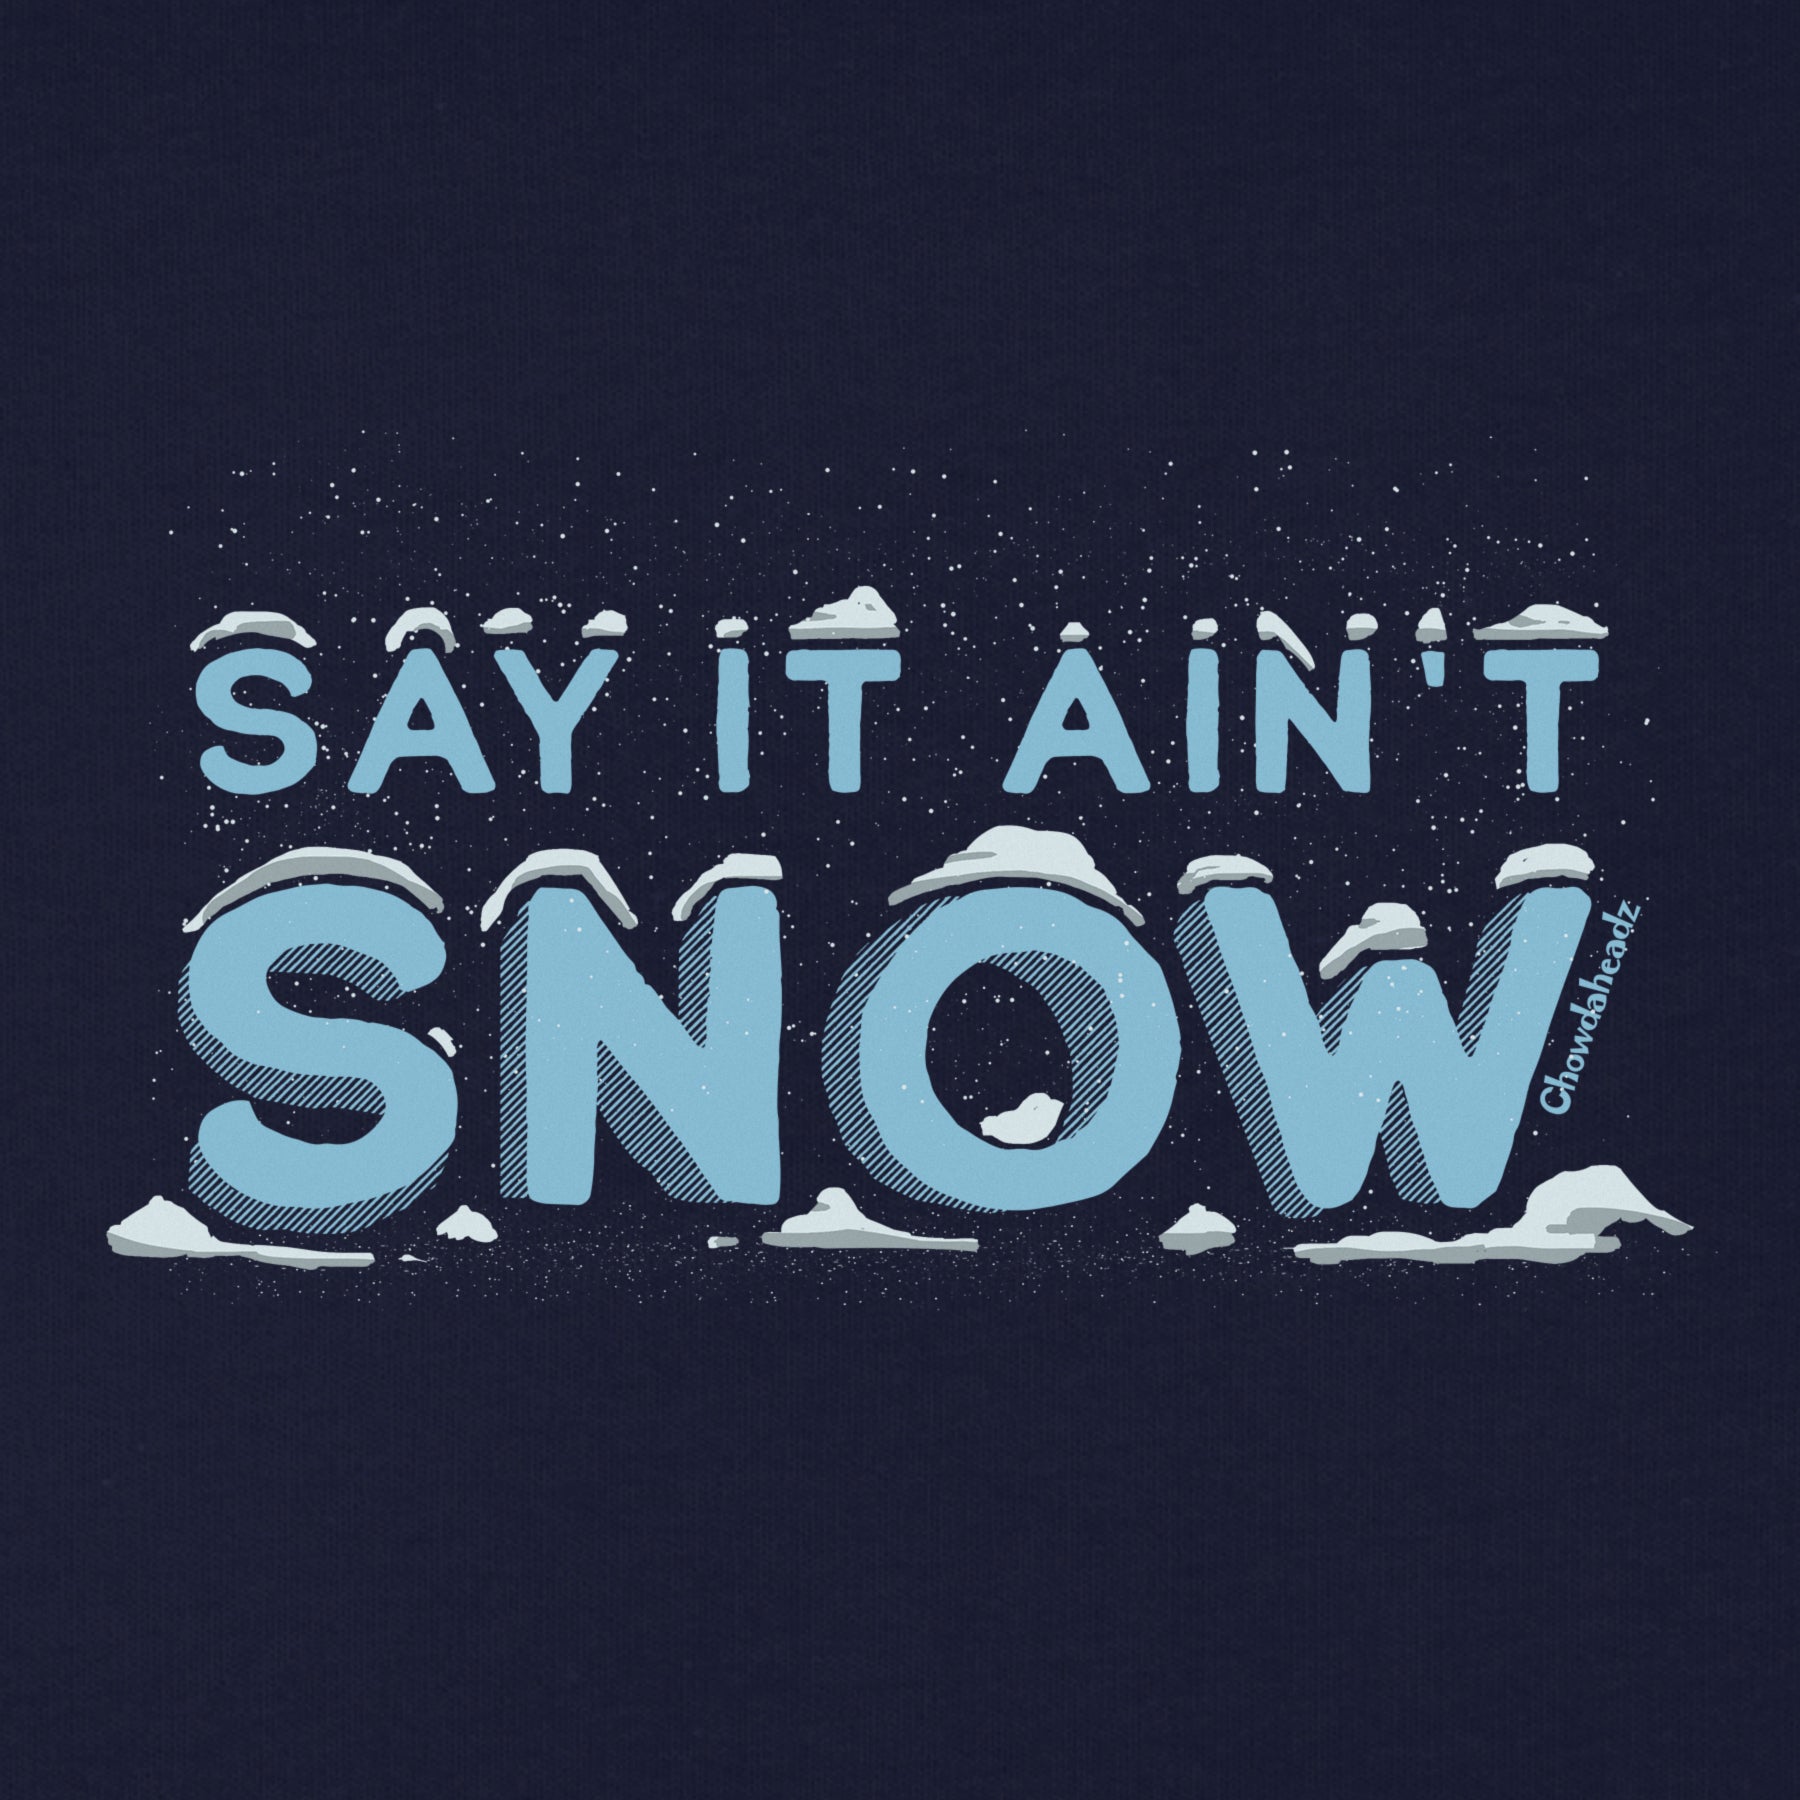 Say It Ain't Snow Youth T-Shirt - Chowdaheadz